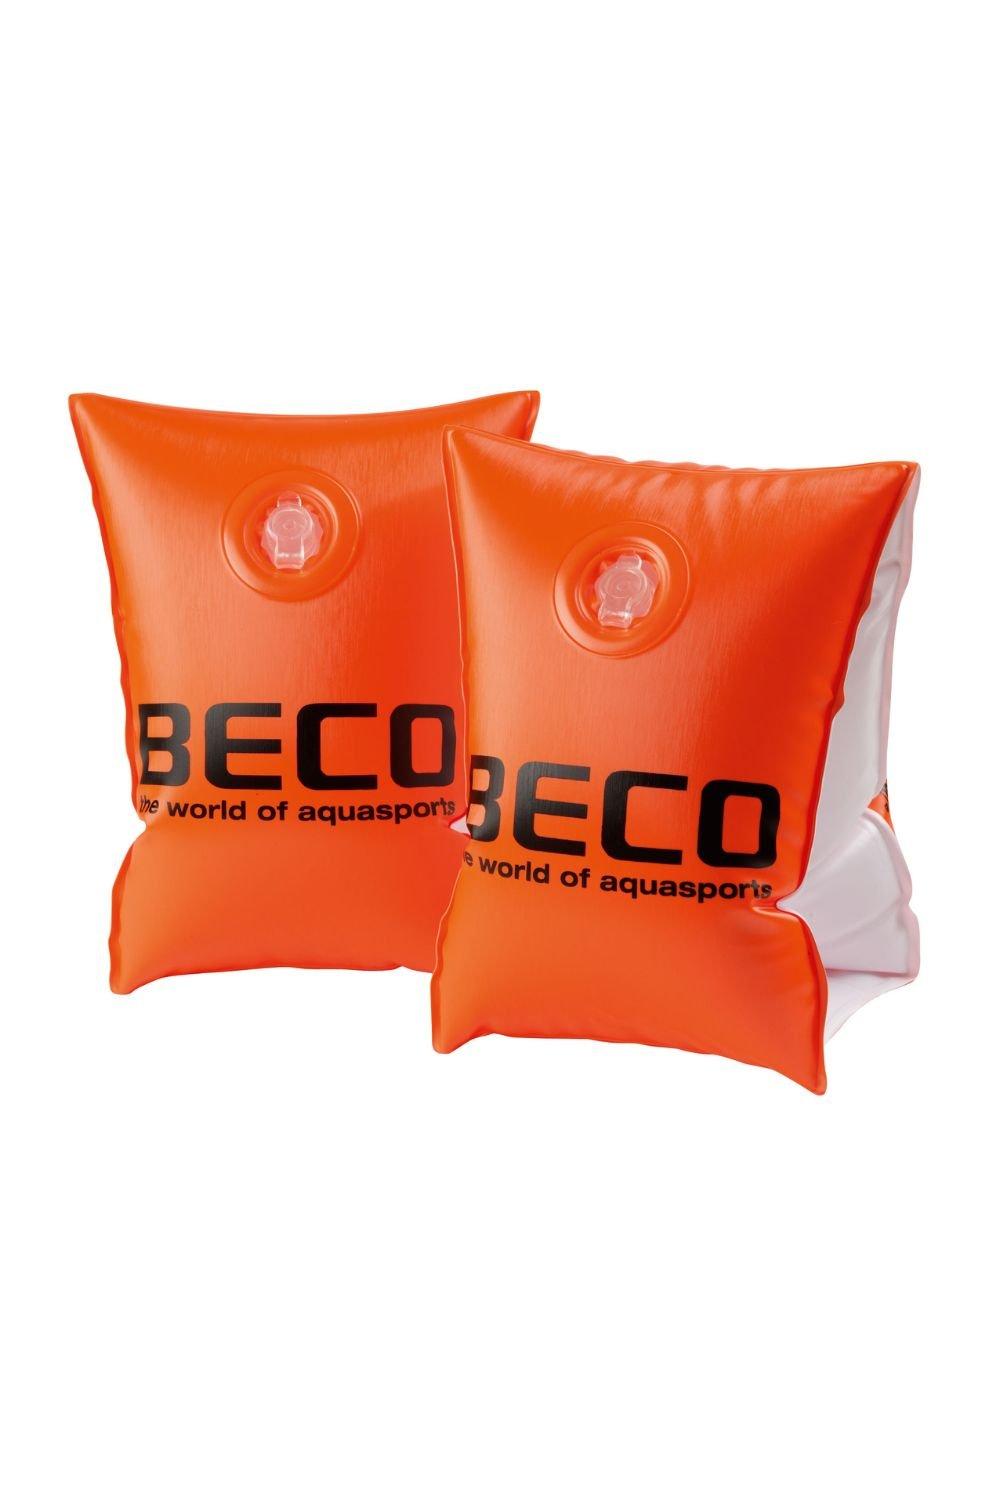 Beco Swimming Arm Bands for 6 - 12 yrs (30 - 60kg) - Orange|orange